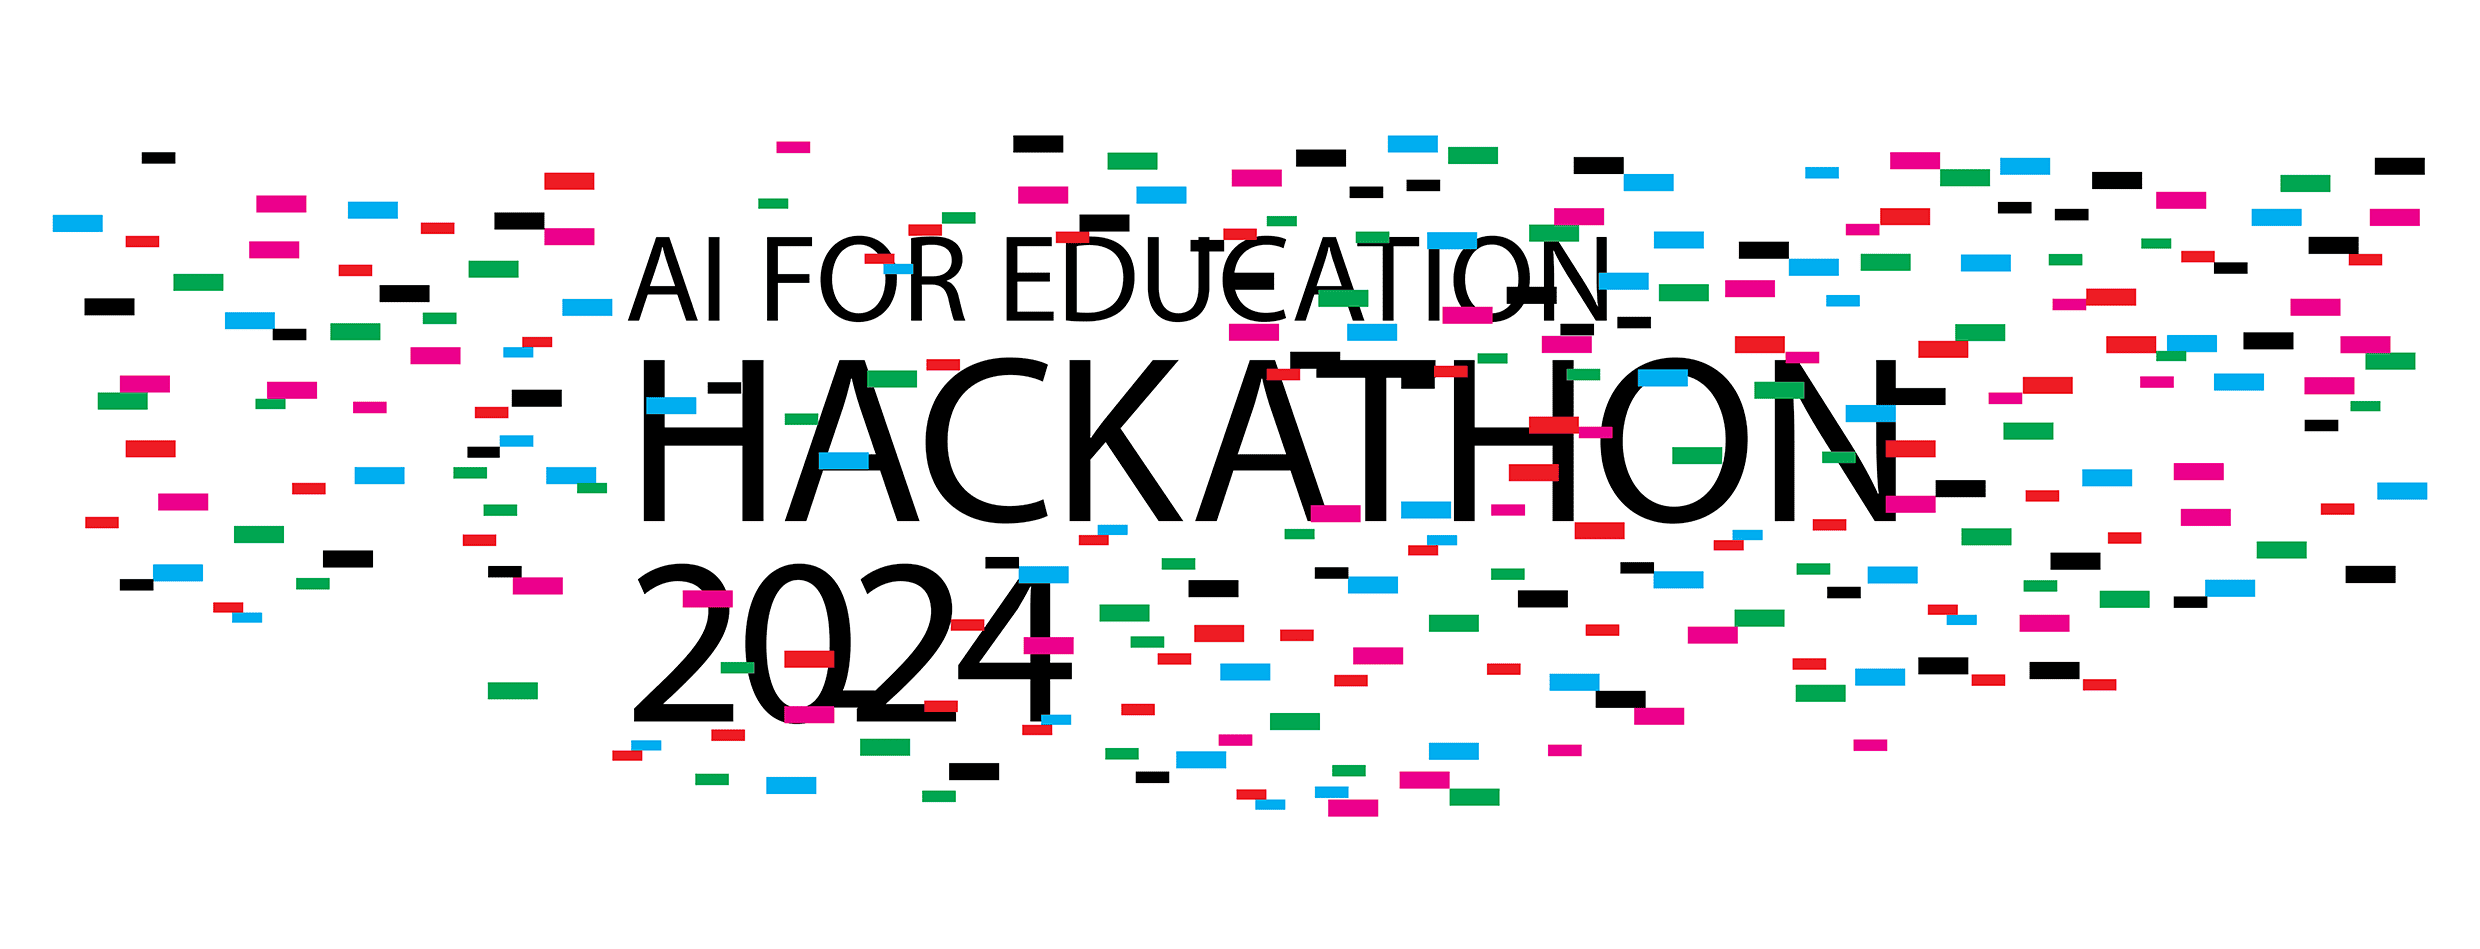 Hackathon 2024 Banner